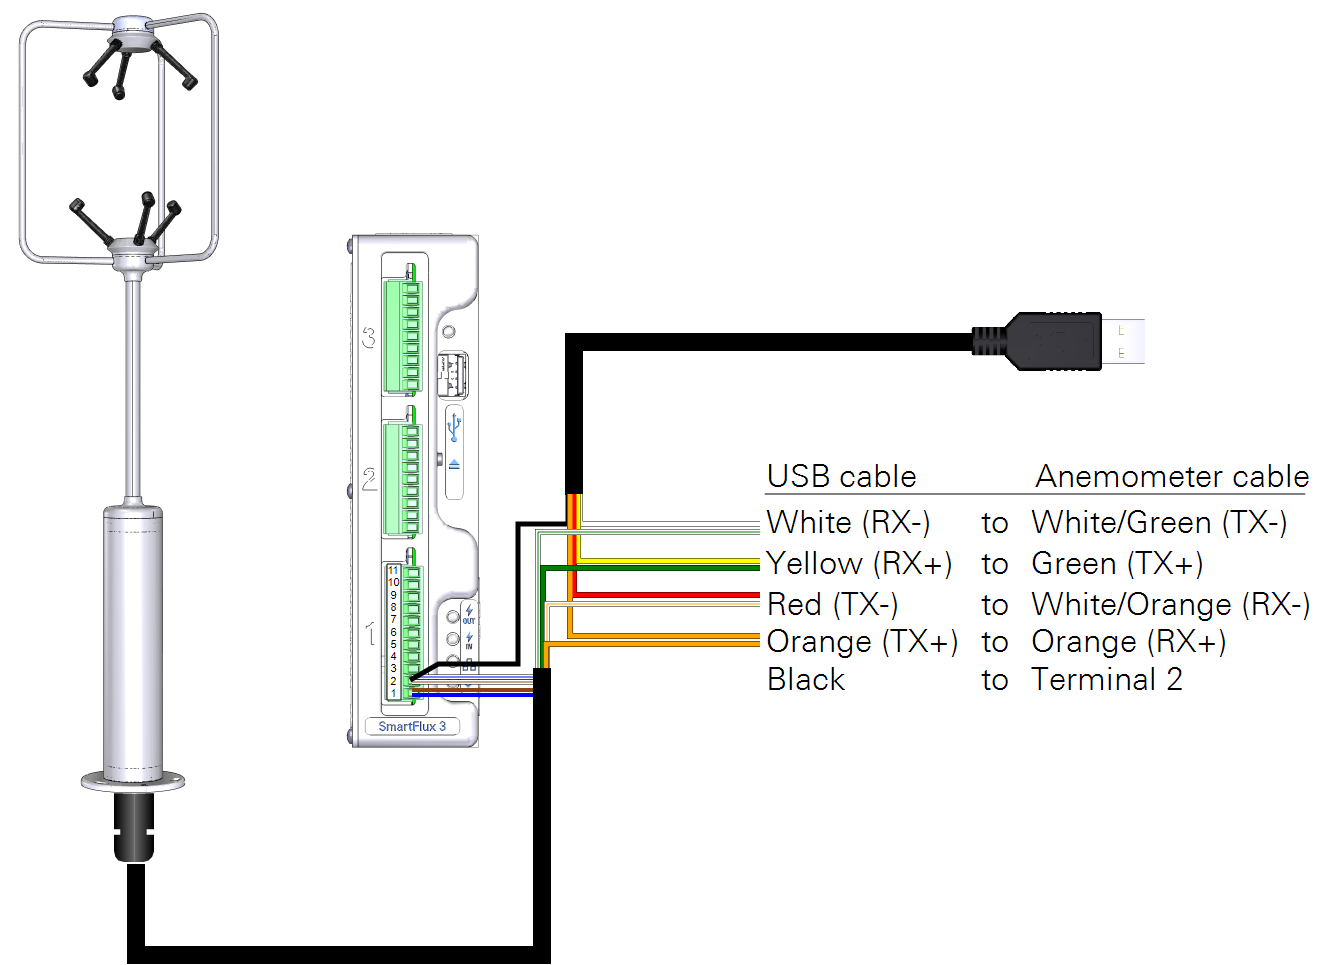 WindMaster USB cable